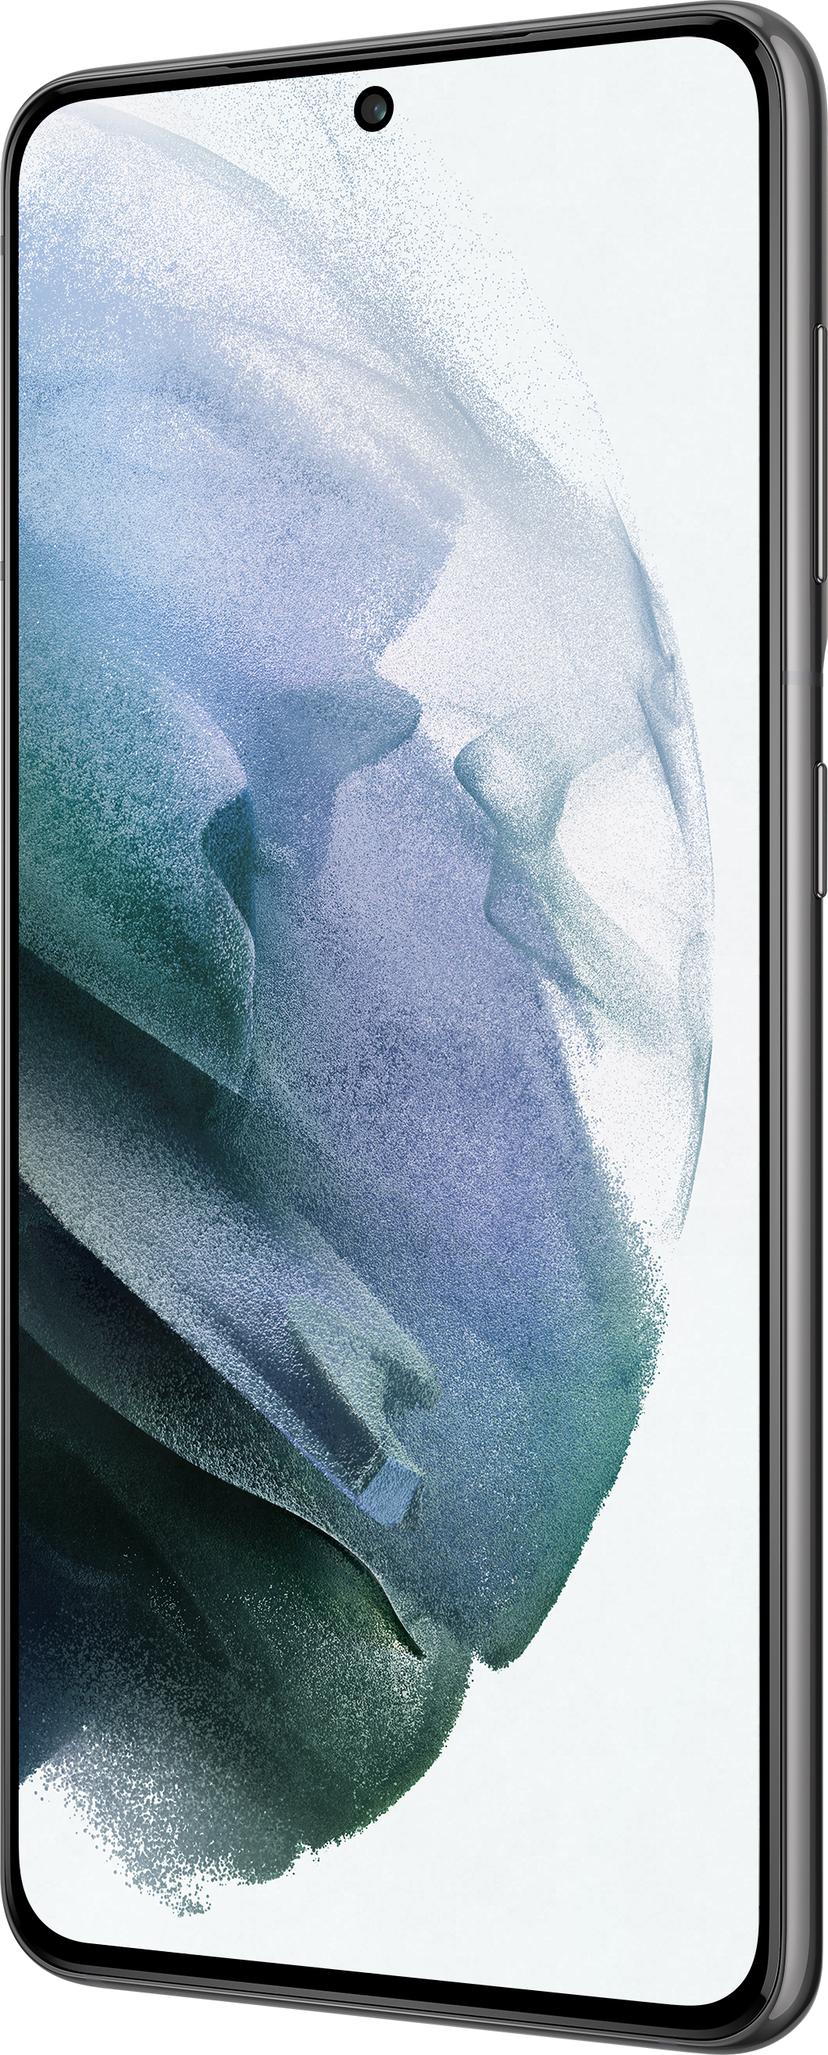 Samsung Galaxy S21 5G 256GB Dual-SIM Fantomgrå